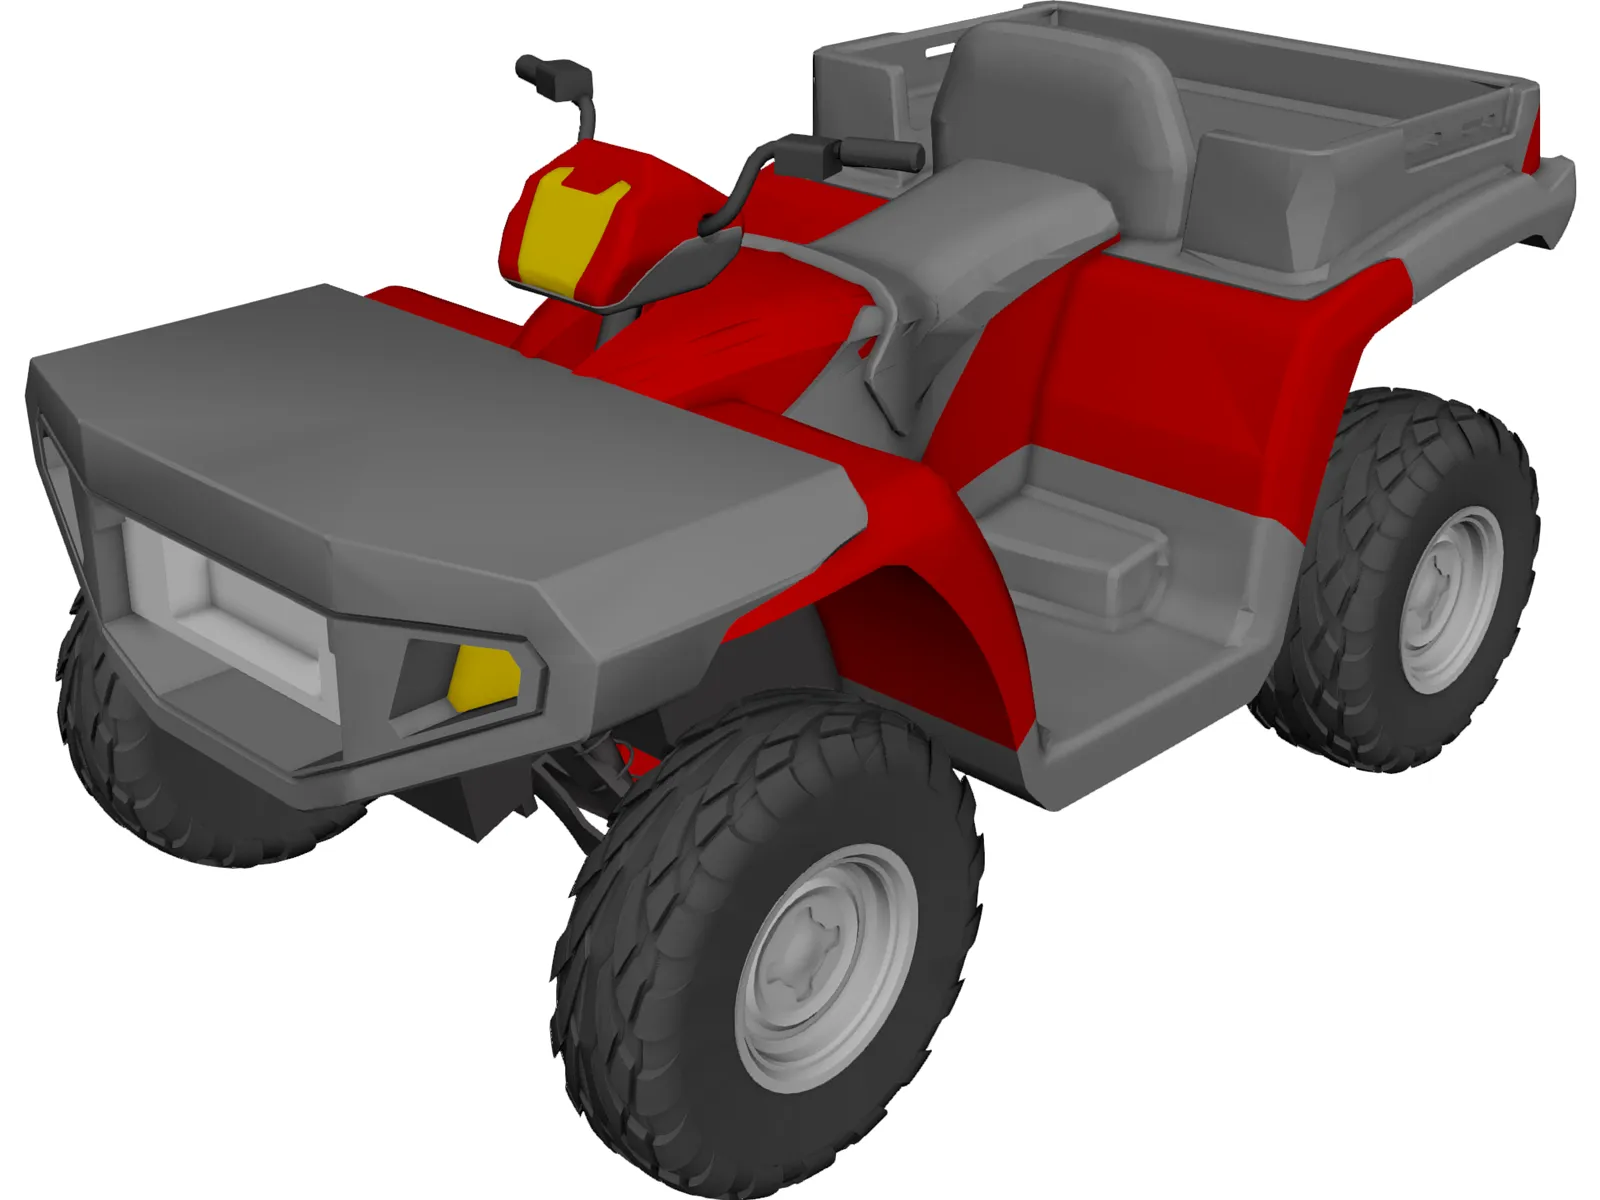 Polaris Sportsman 500 ATV 3D Model